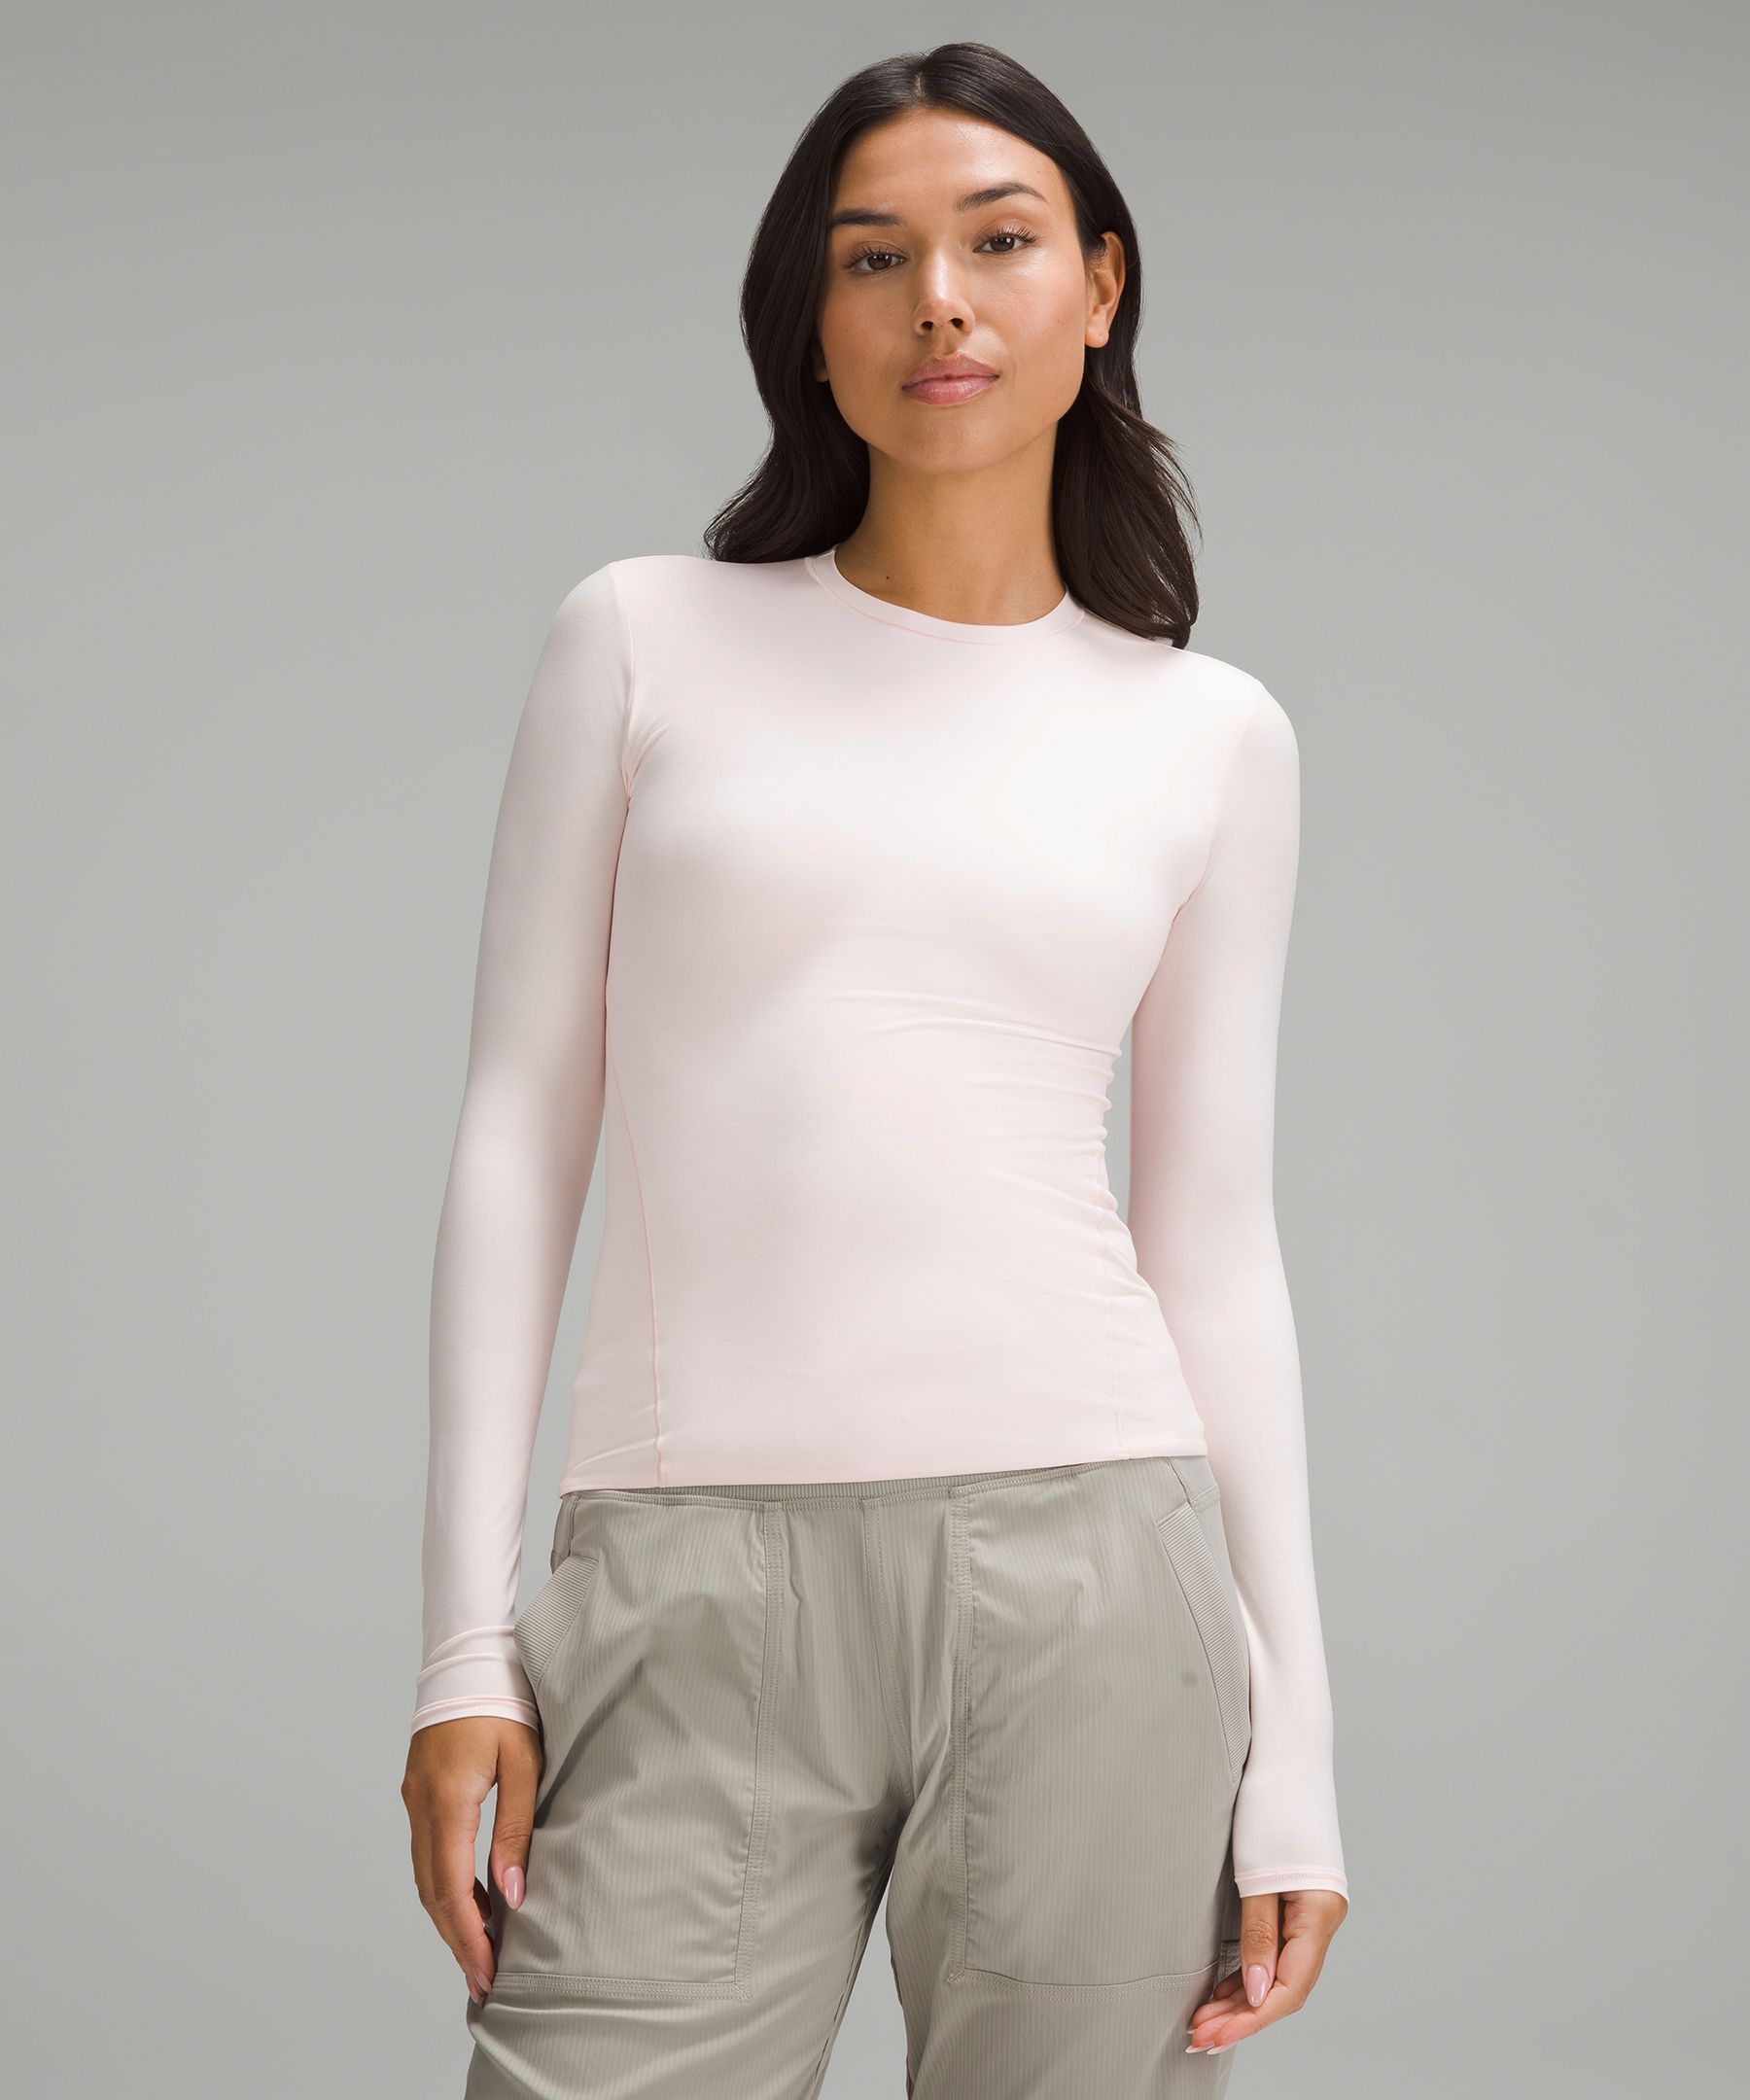 Wundermost Ultra-Soft Nulu Turtleneck Bodysuit, Women's Long Sleeve Shirts, lululemon